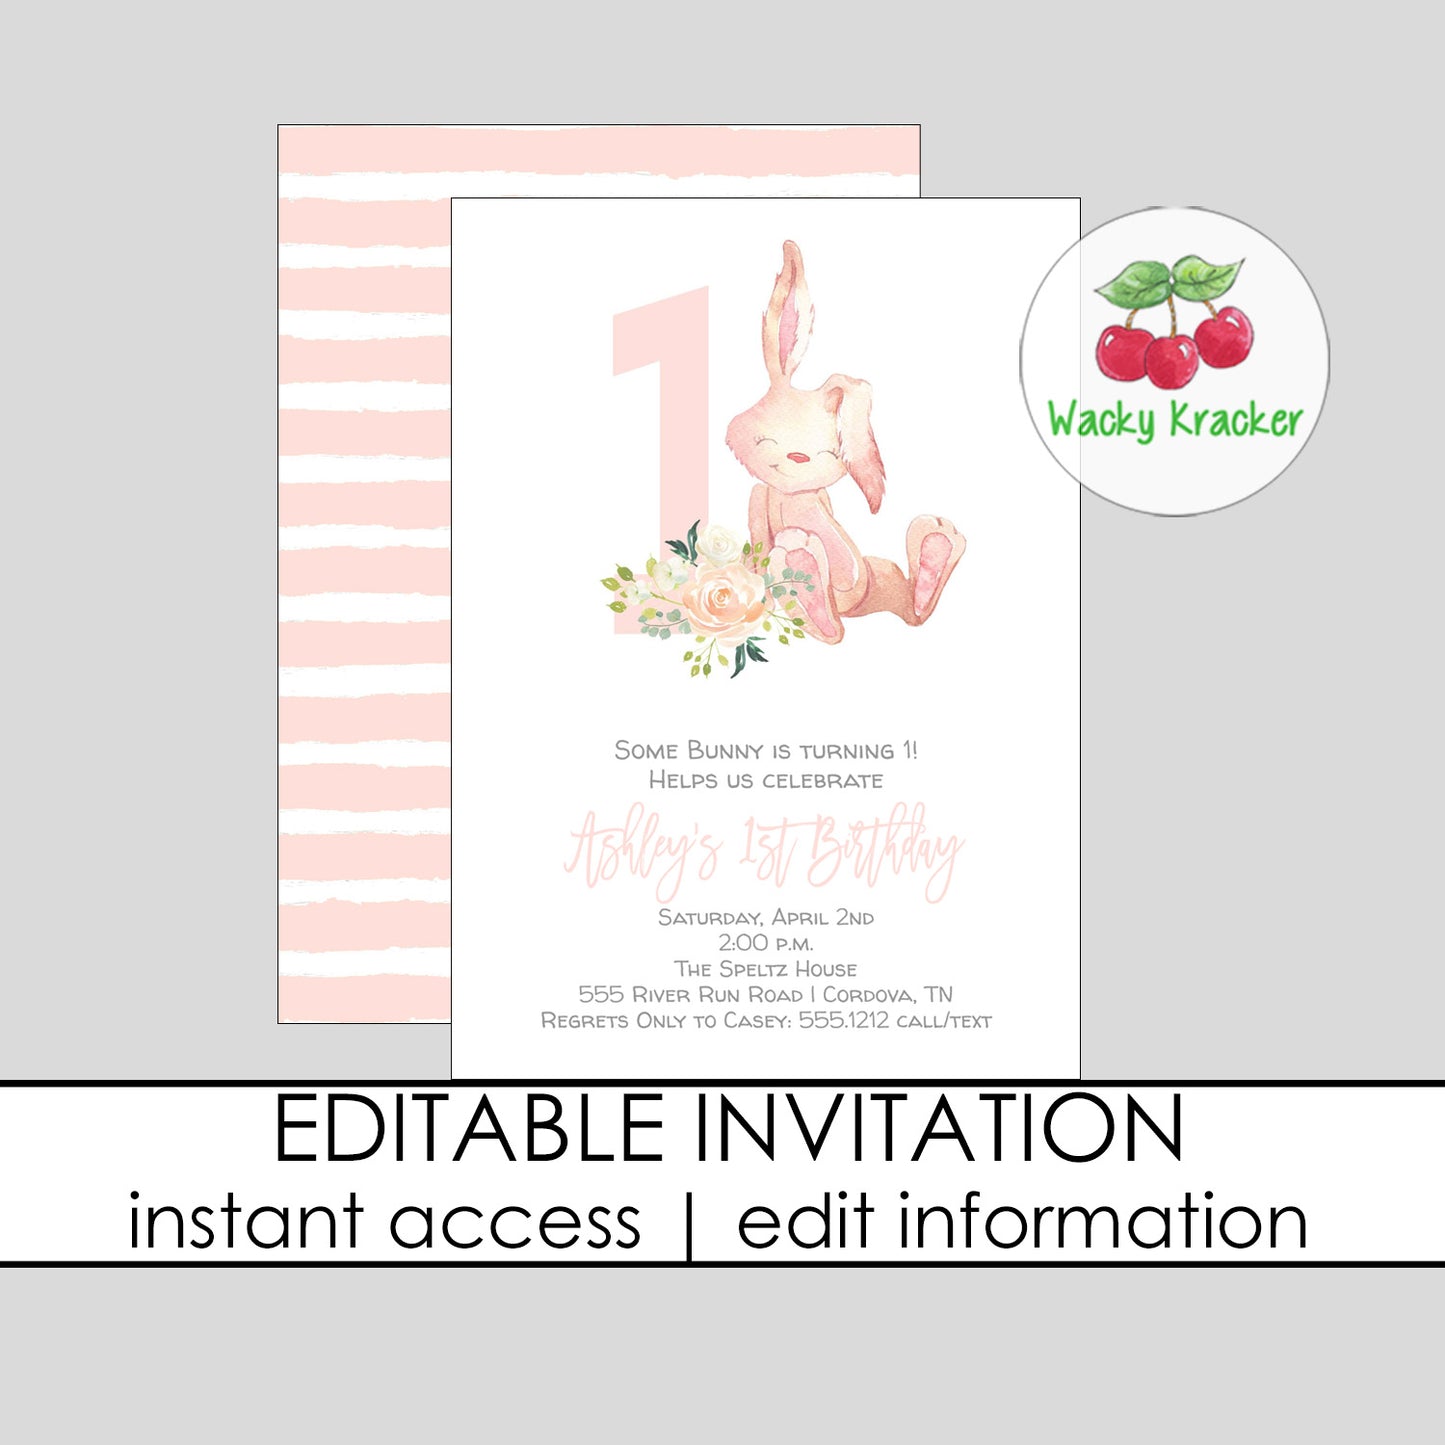 Some Bunny Birthday Invitation